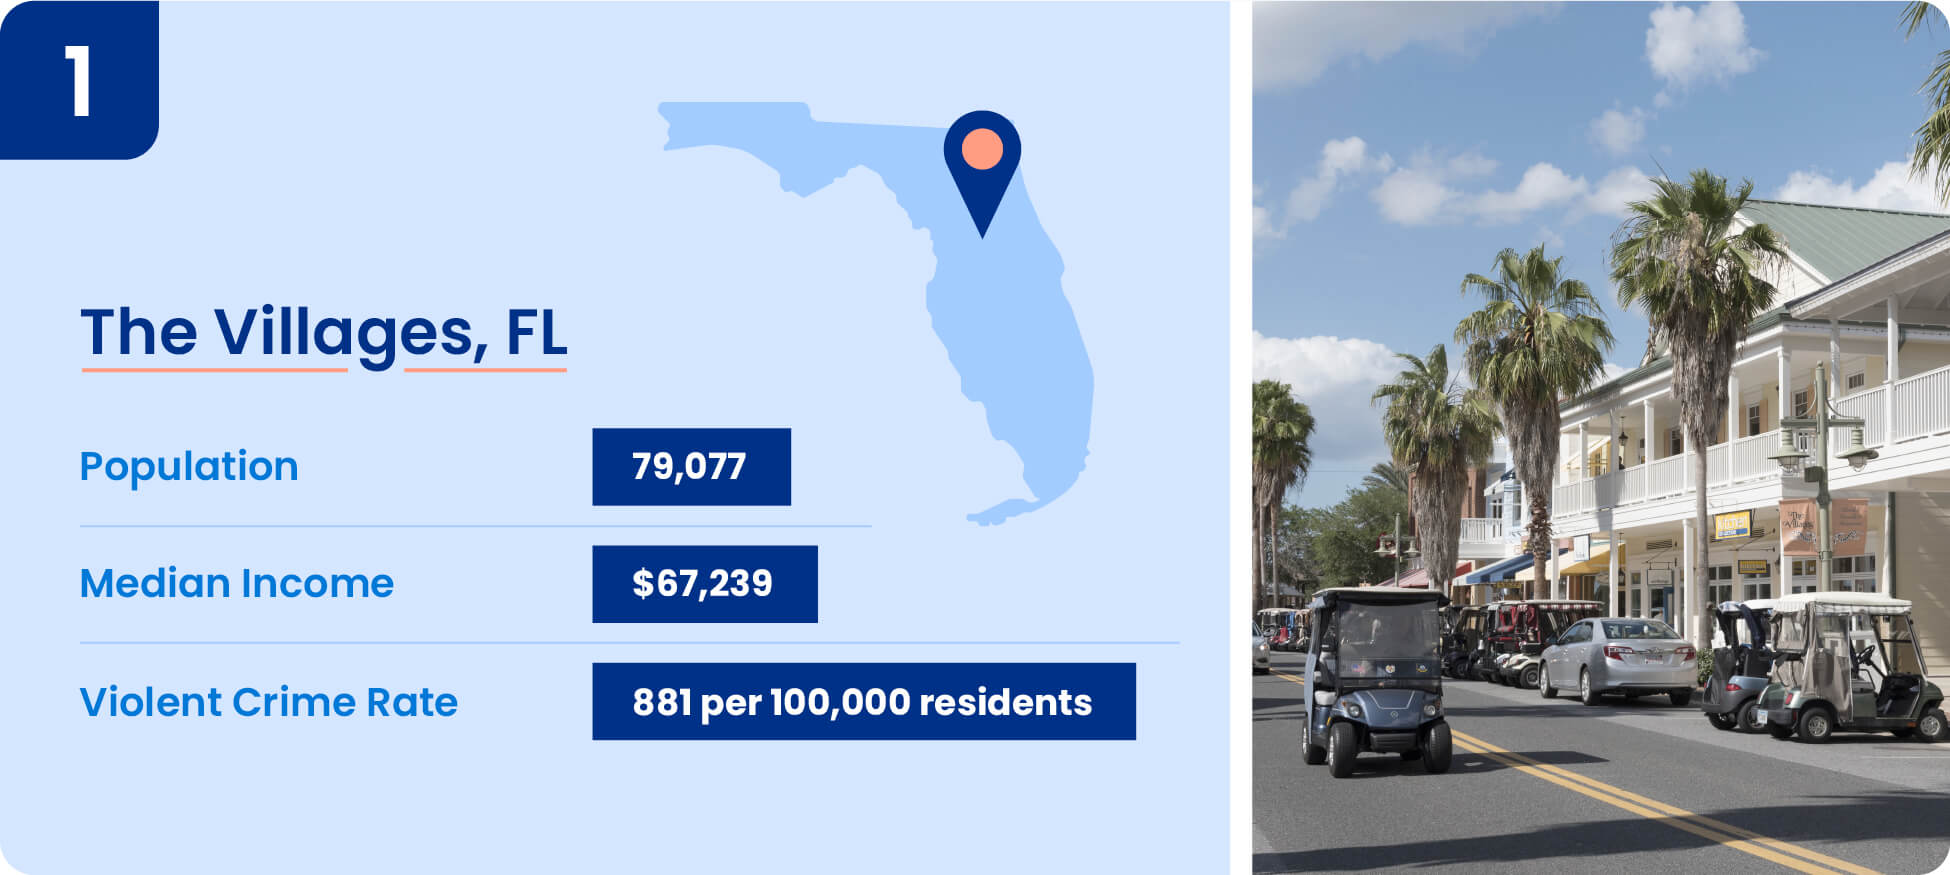 Image shows safety data including median income, population, and violent crime rate for The Villages, Florida.